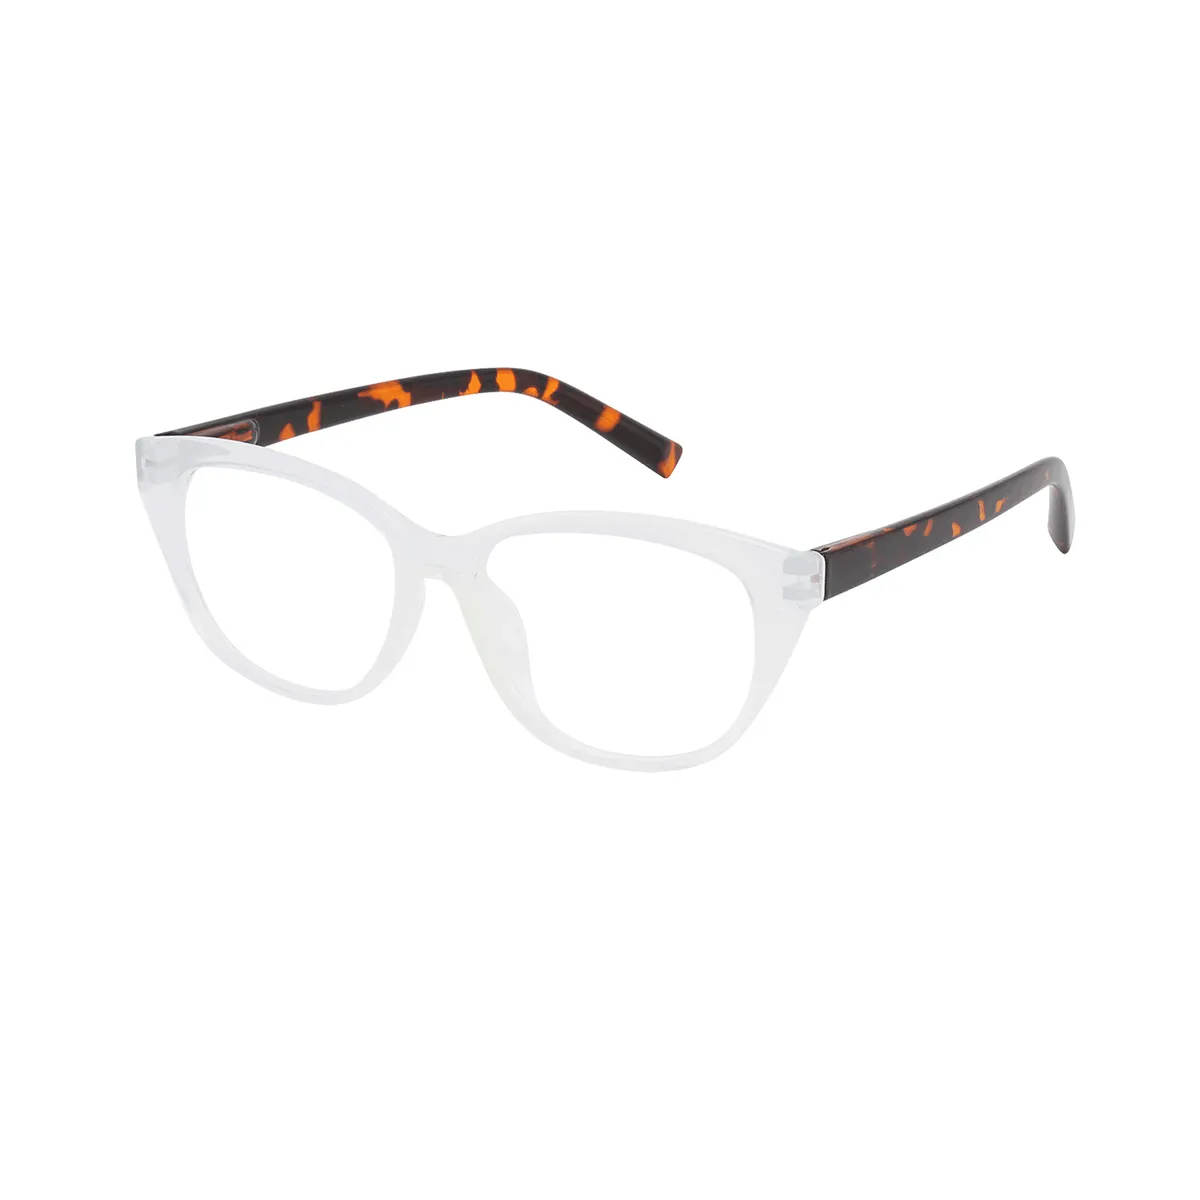 Auchinleck - Cat-eye Translucent Glasses for Women